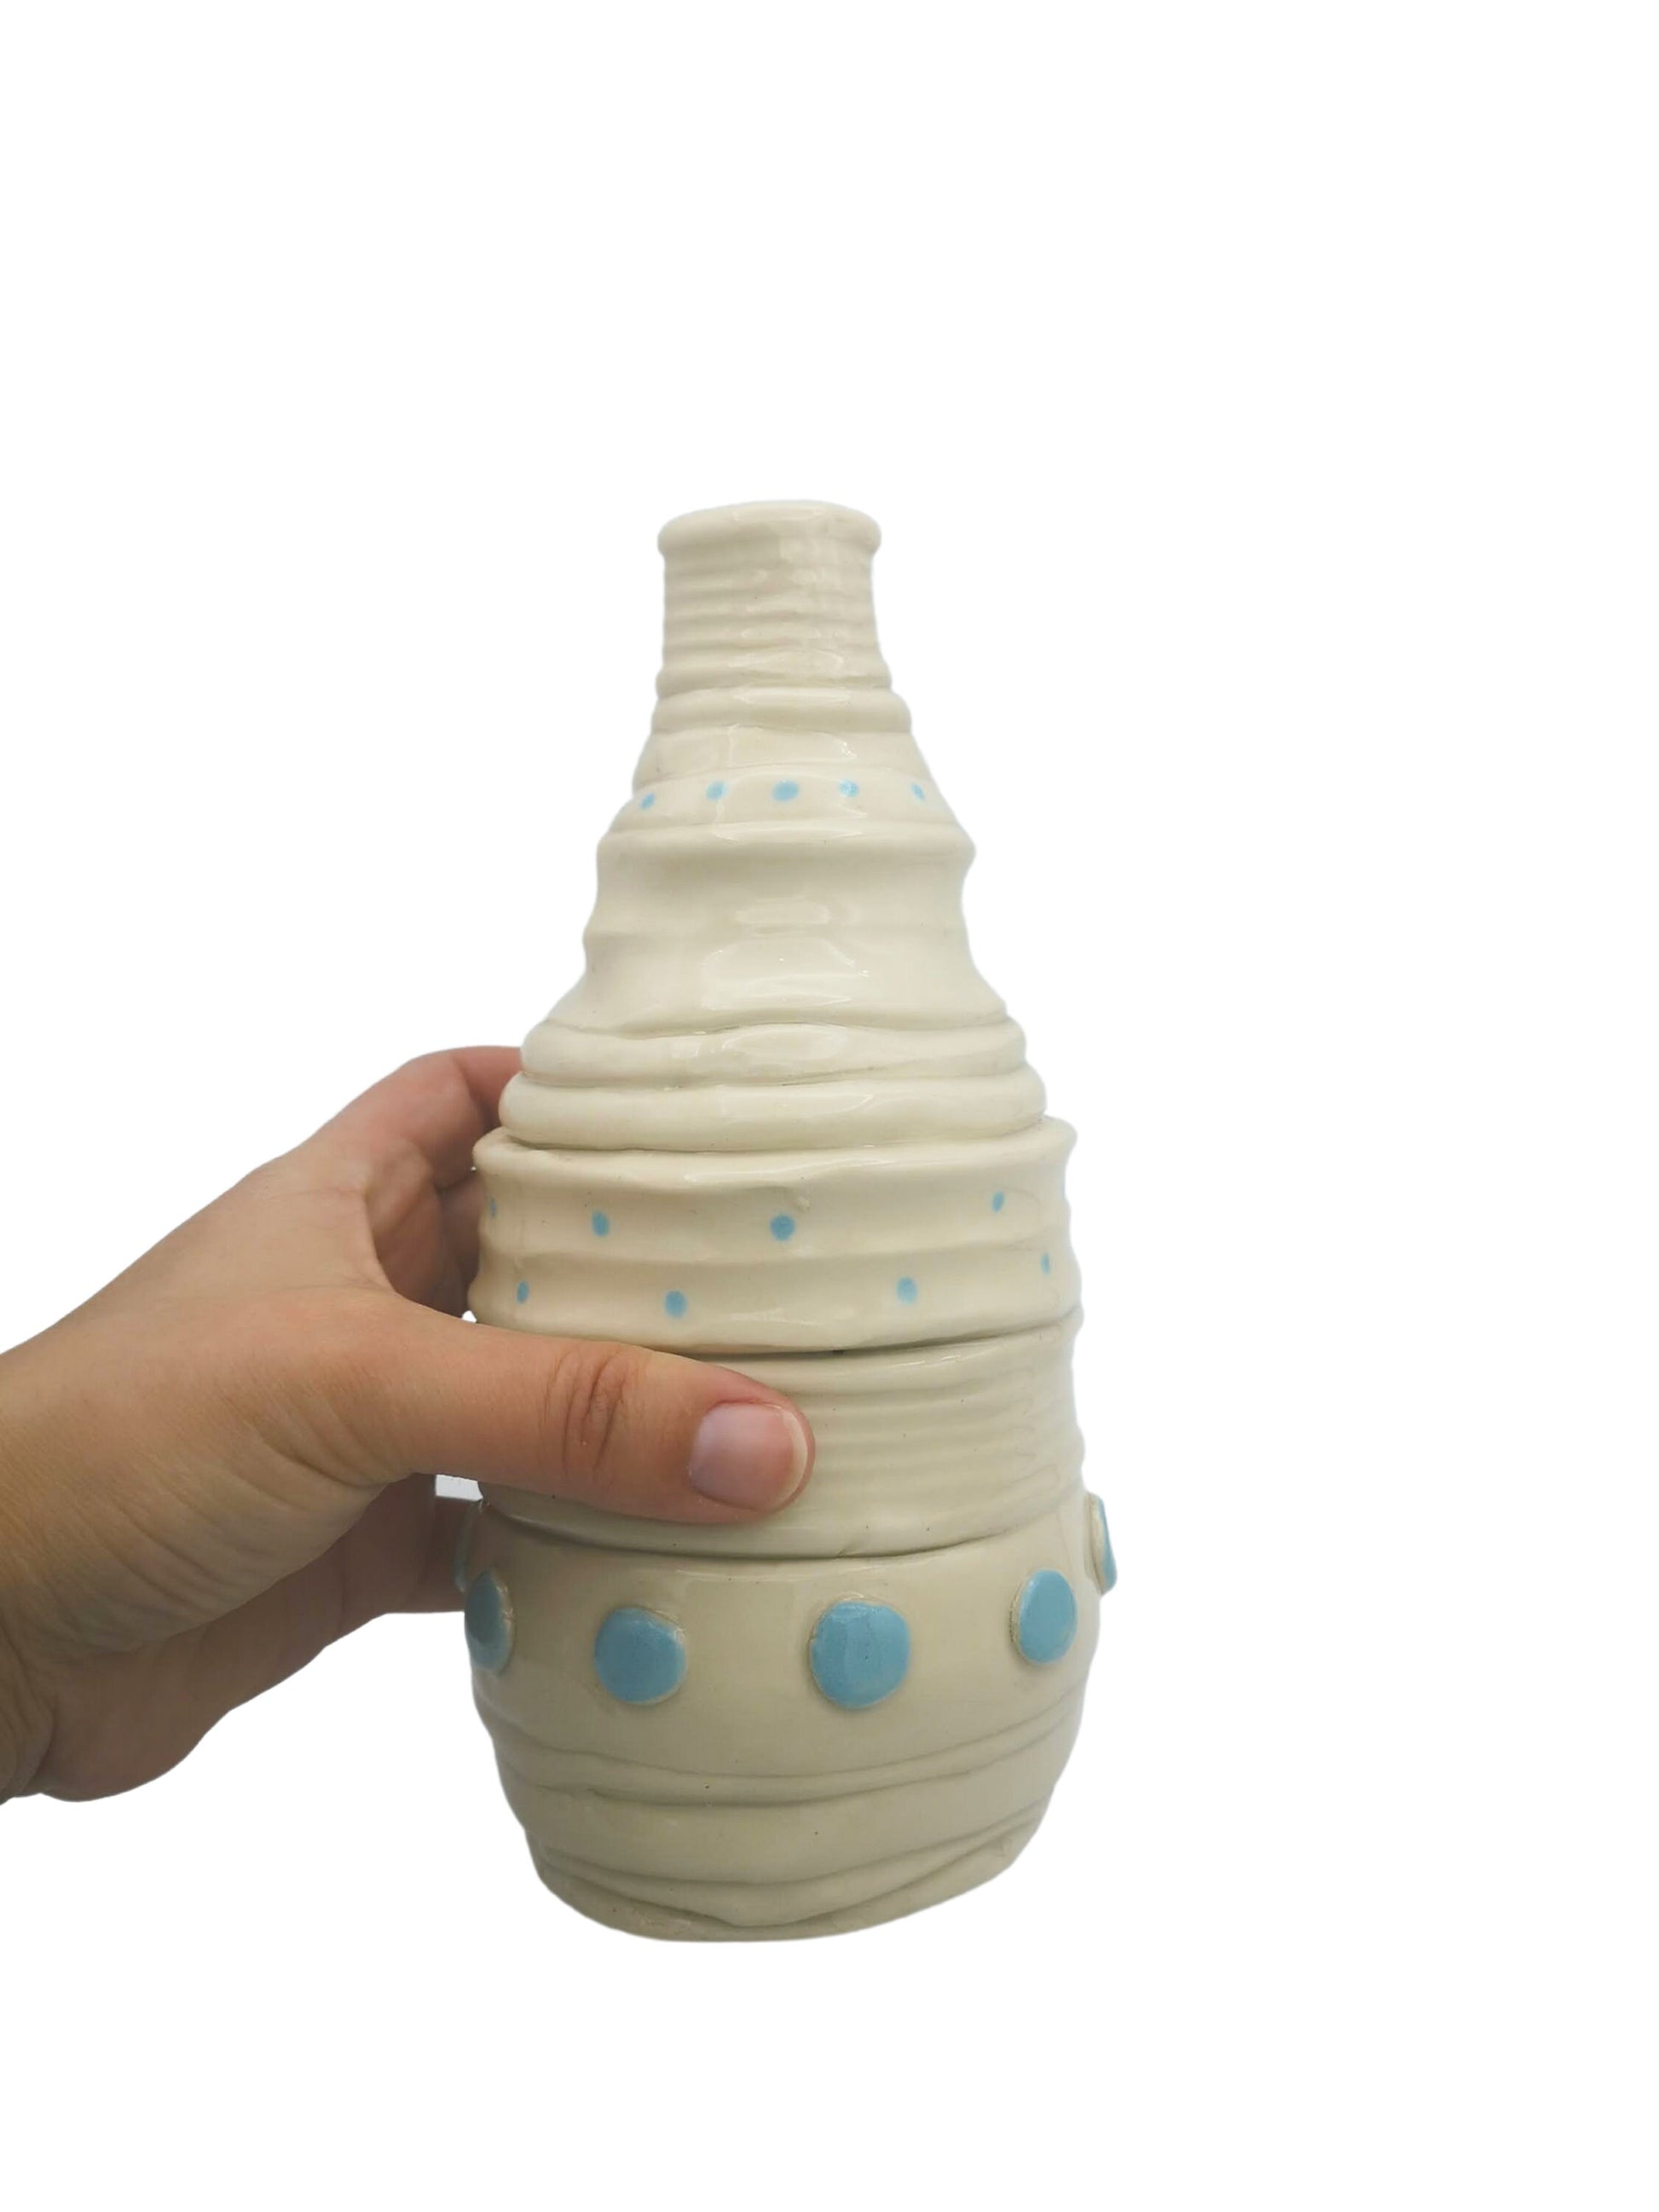 Irregular Handmade Ceramic Vase For Flowers, Textured Decorative Handbuilt Stoneware Sculptural Bottle For Home Decor With Rustic Look - Ceramica Ana Rafael